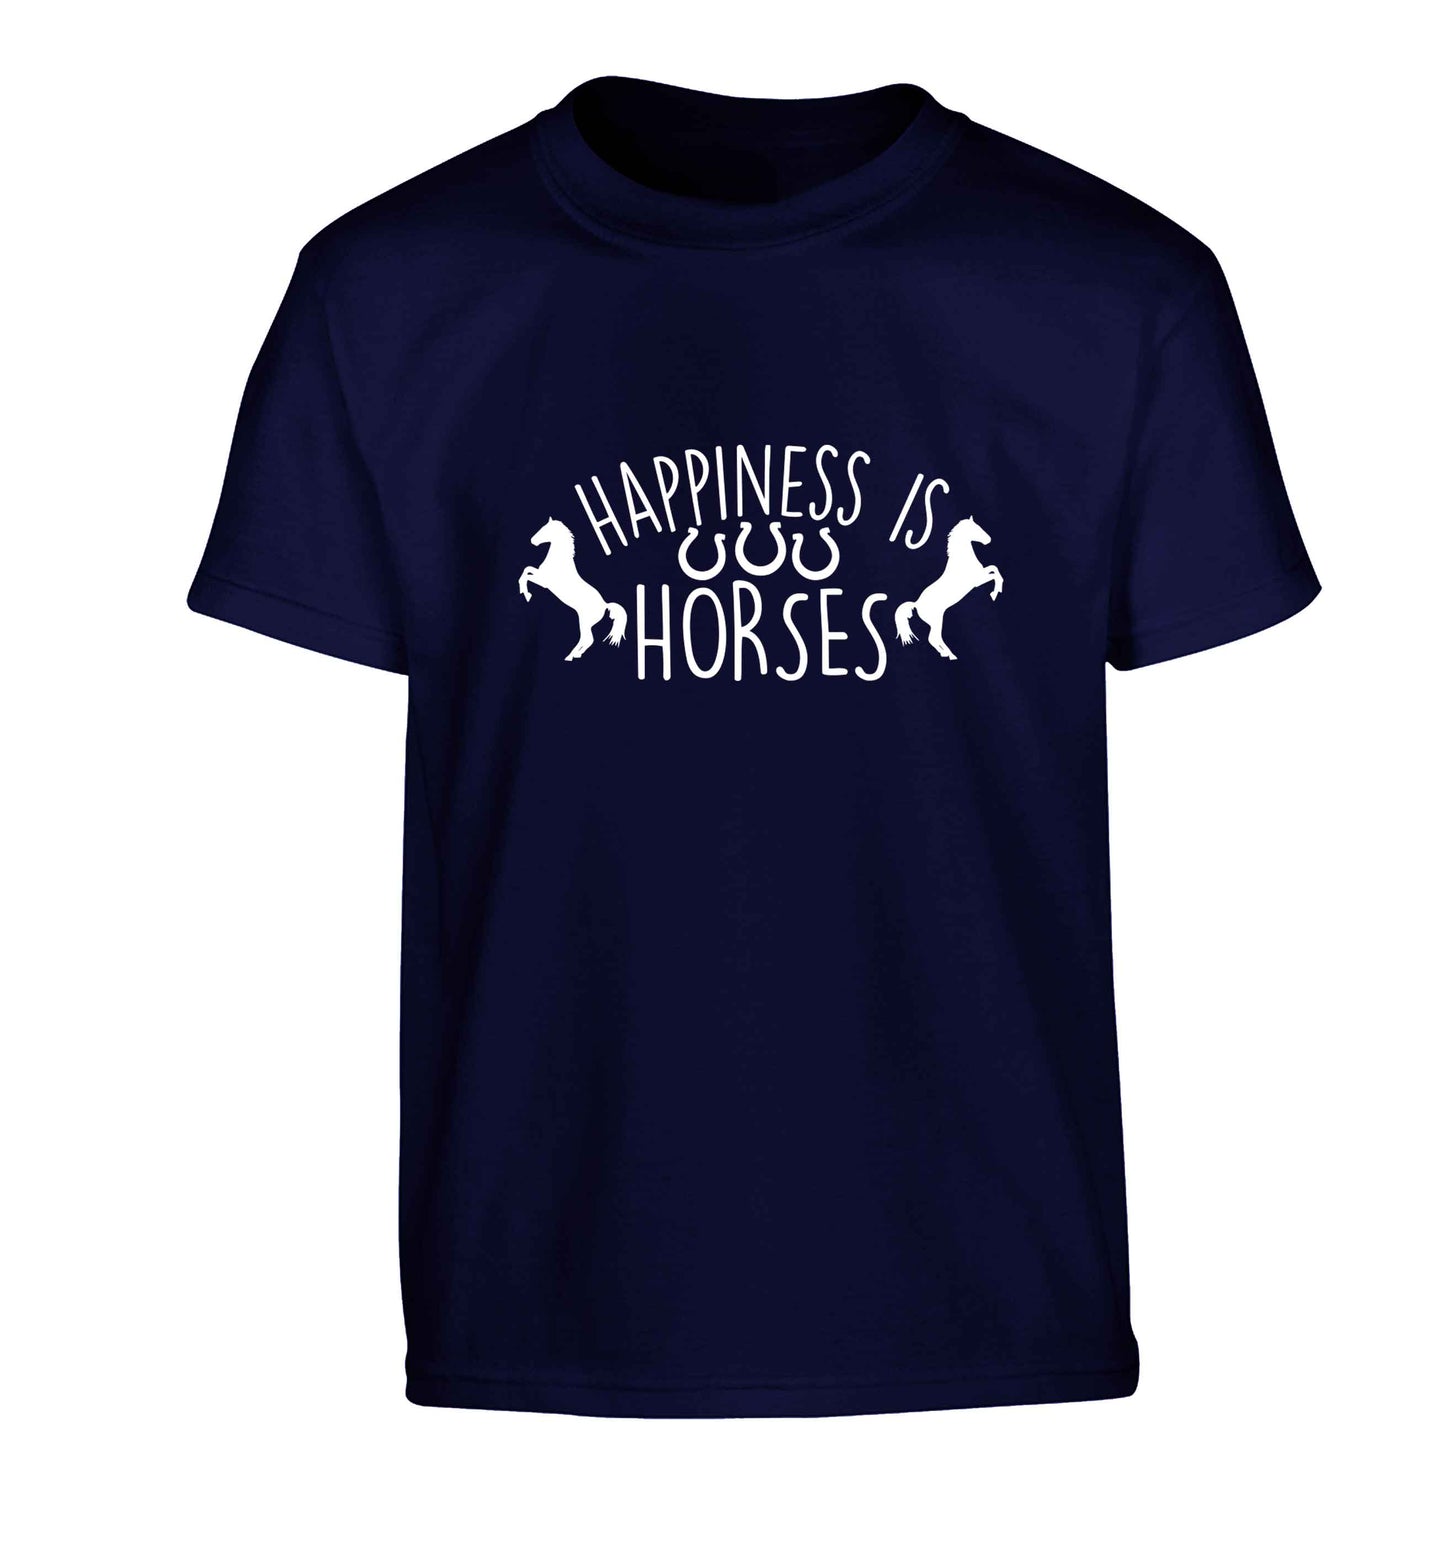 Happiness is horses Children's navy Tshirt 12-13 Years